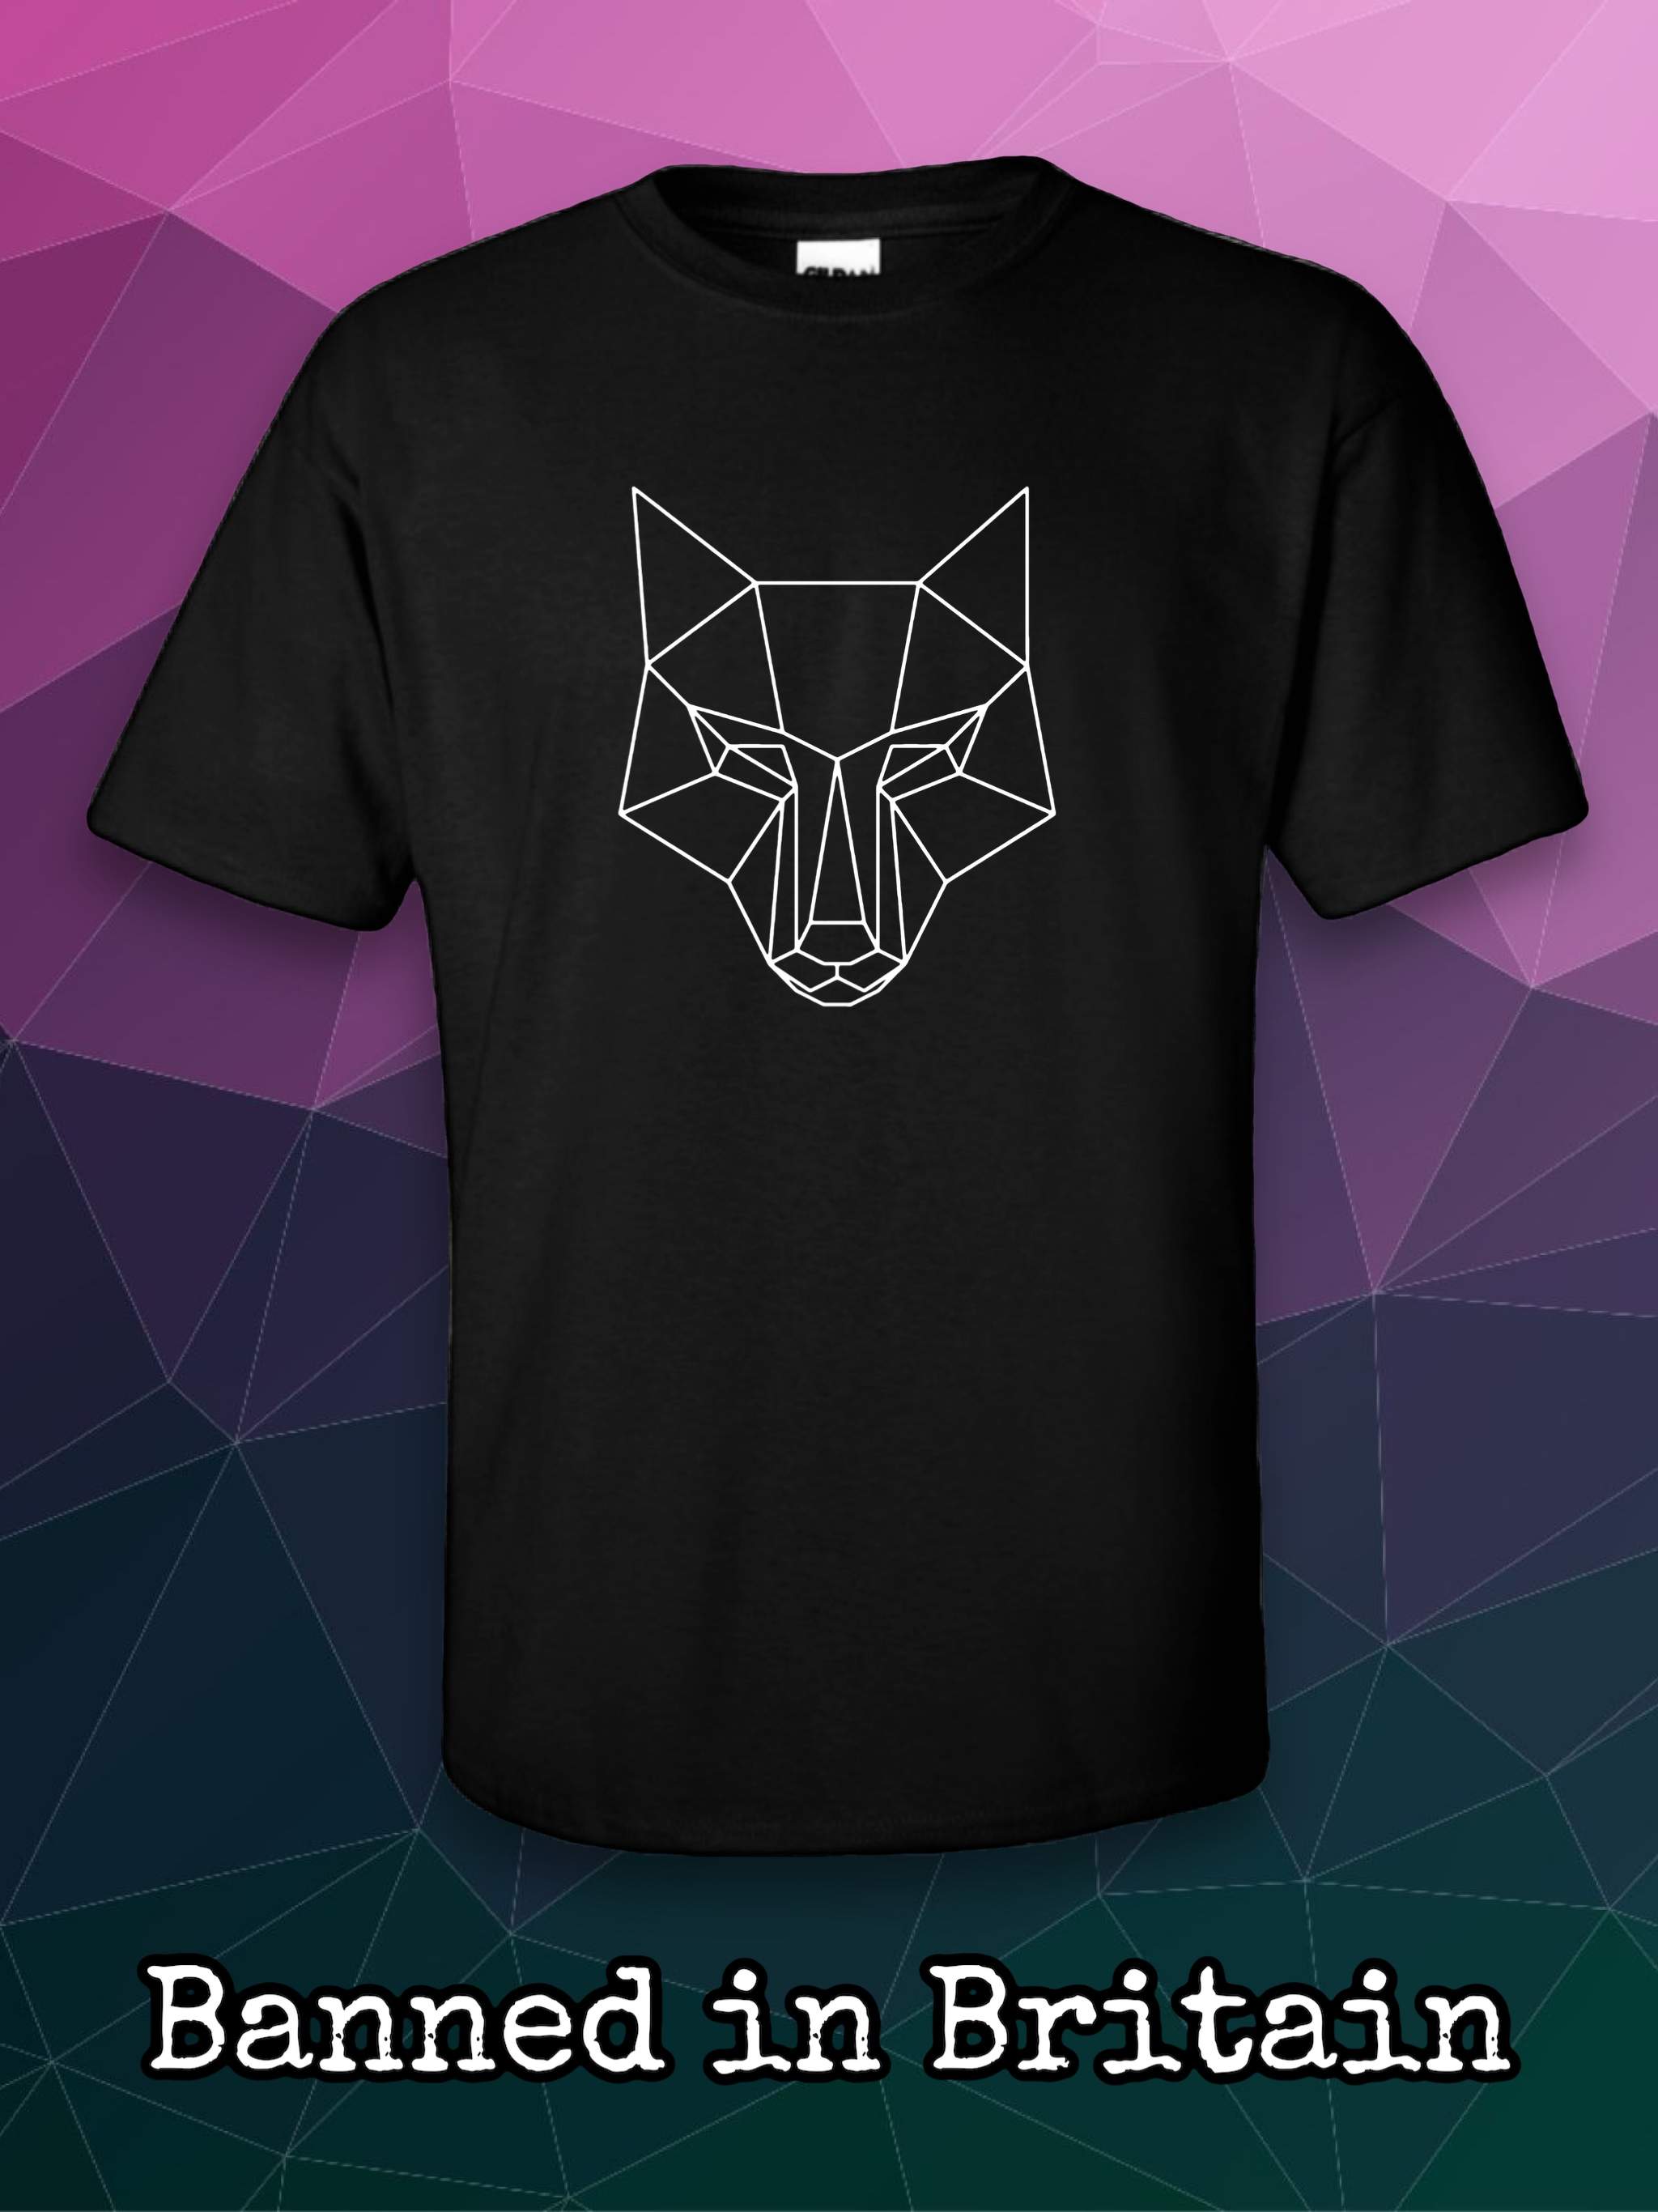 Geometric Animal T-Shirts